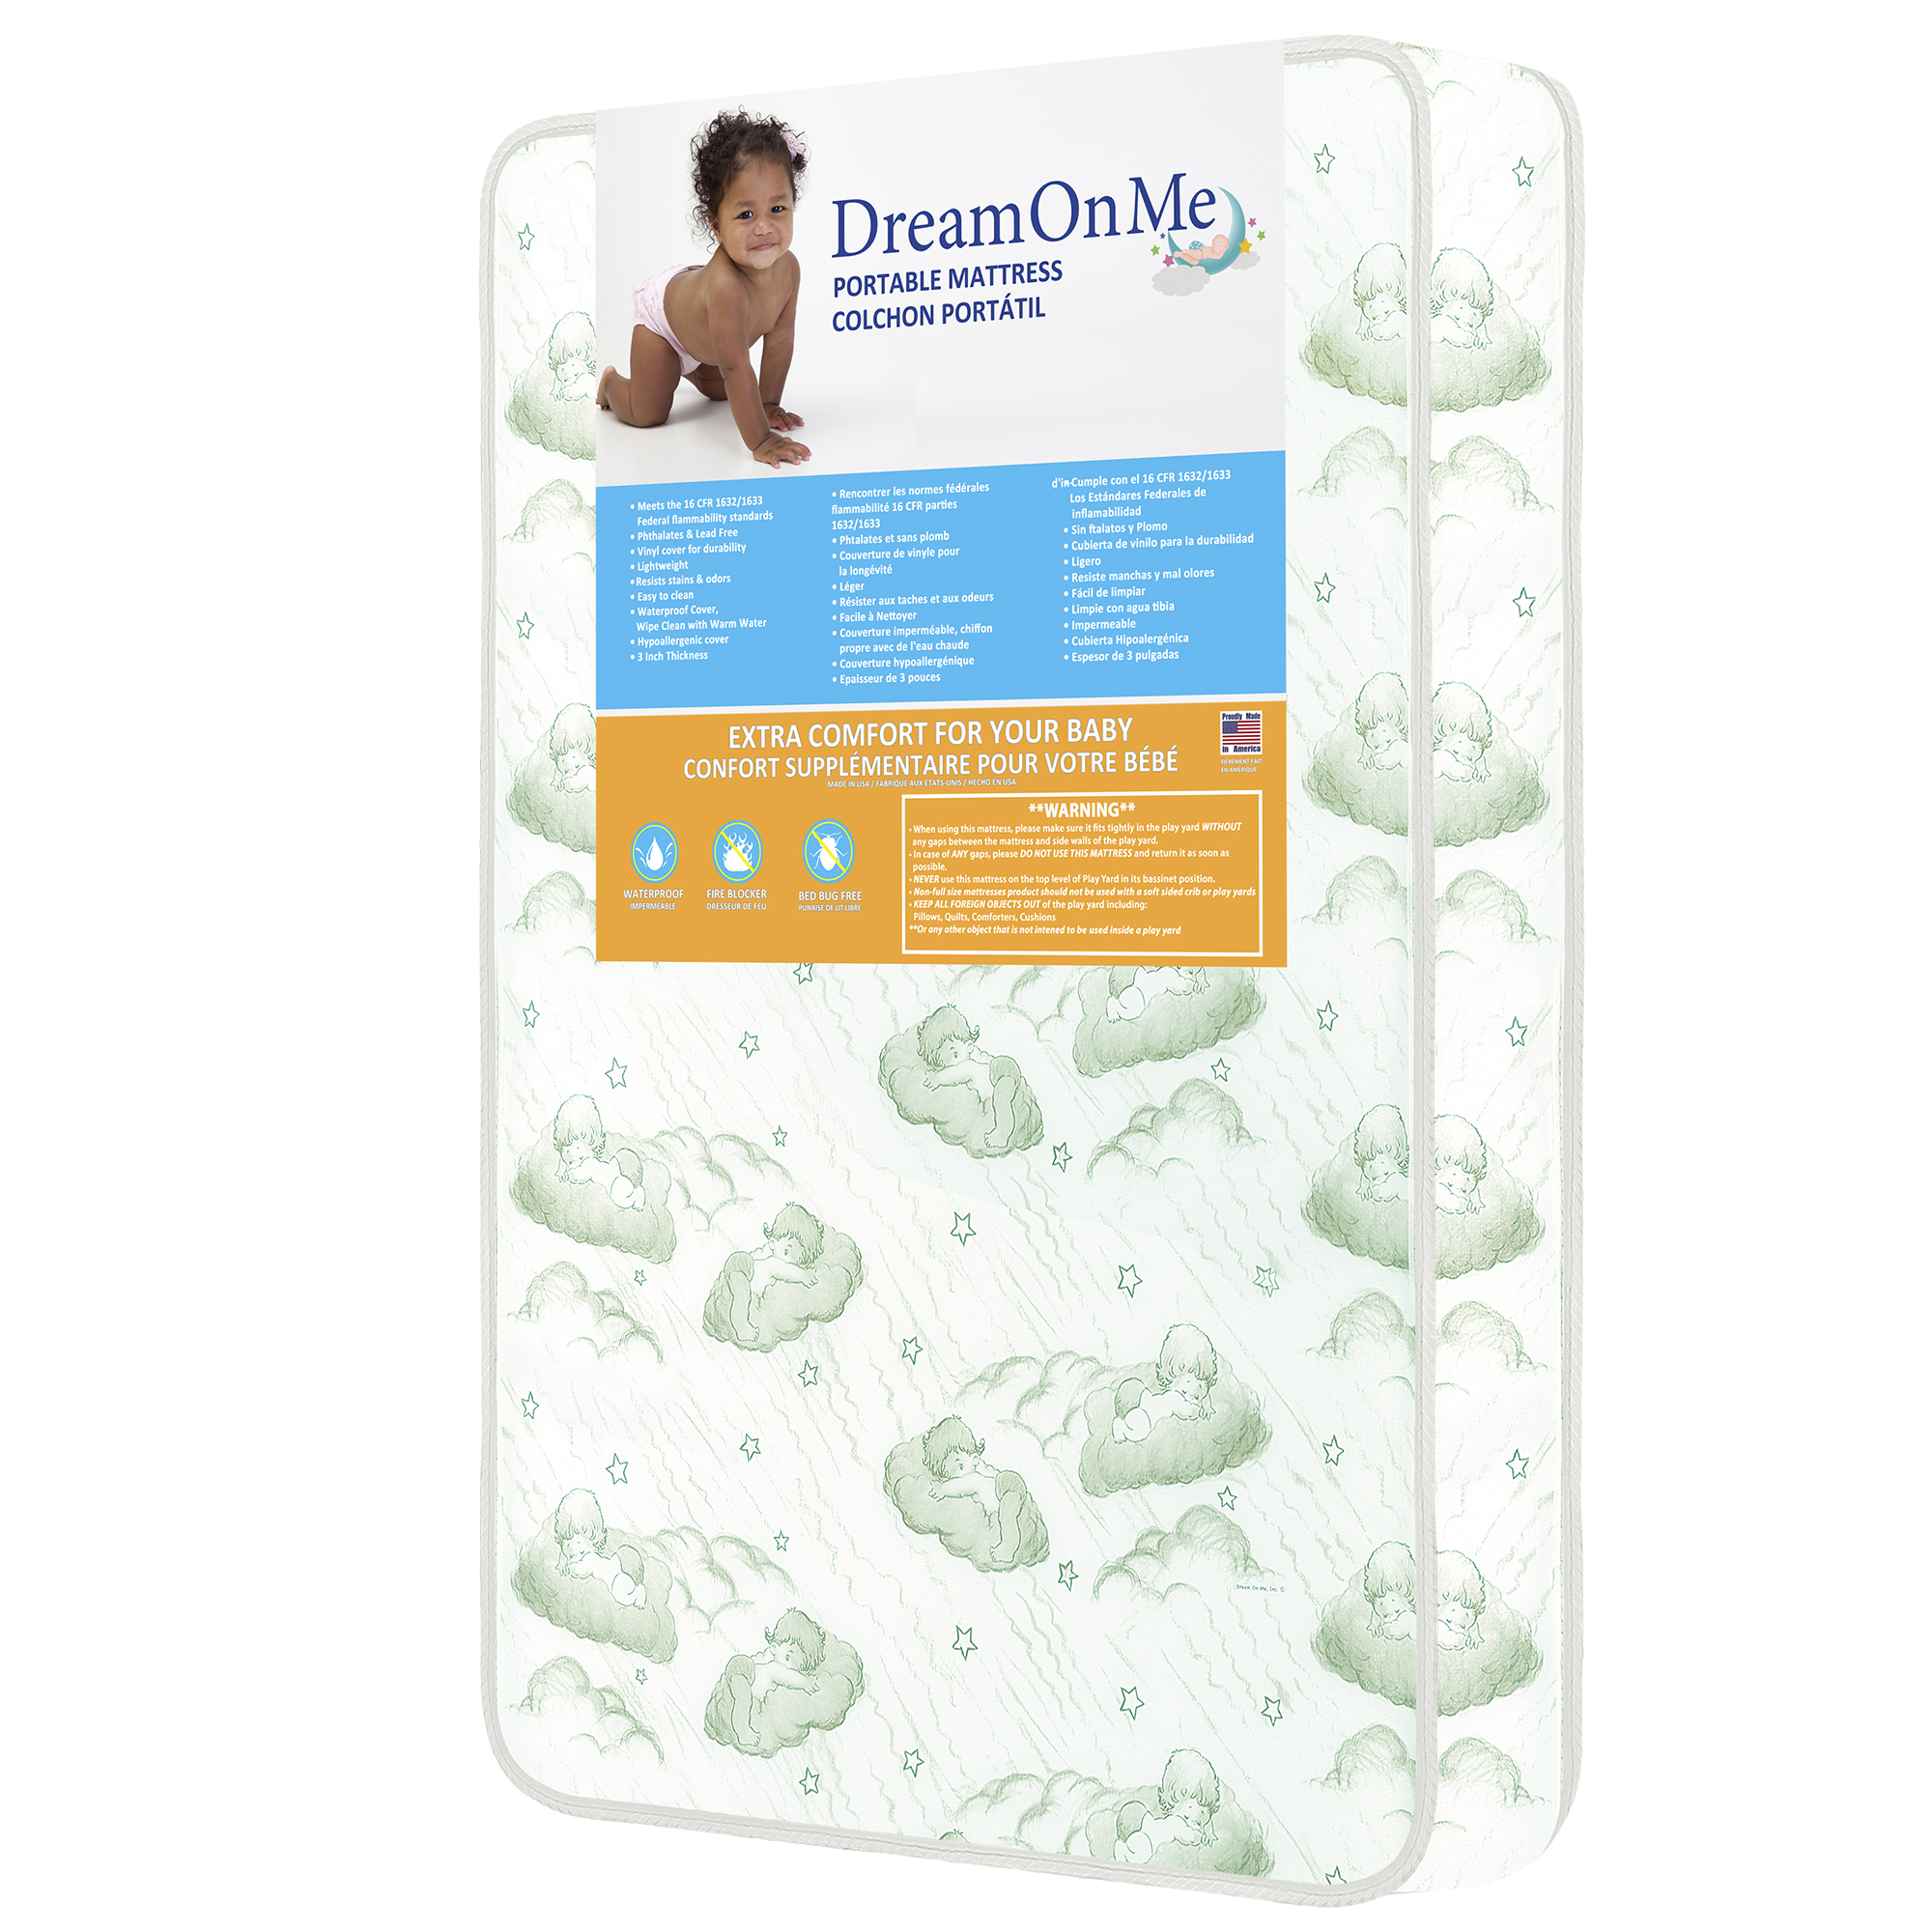 Dream on Me Portable Crib & Toddler Foam Mattress, Greenguard Gold Certified - image 1 of 3